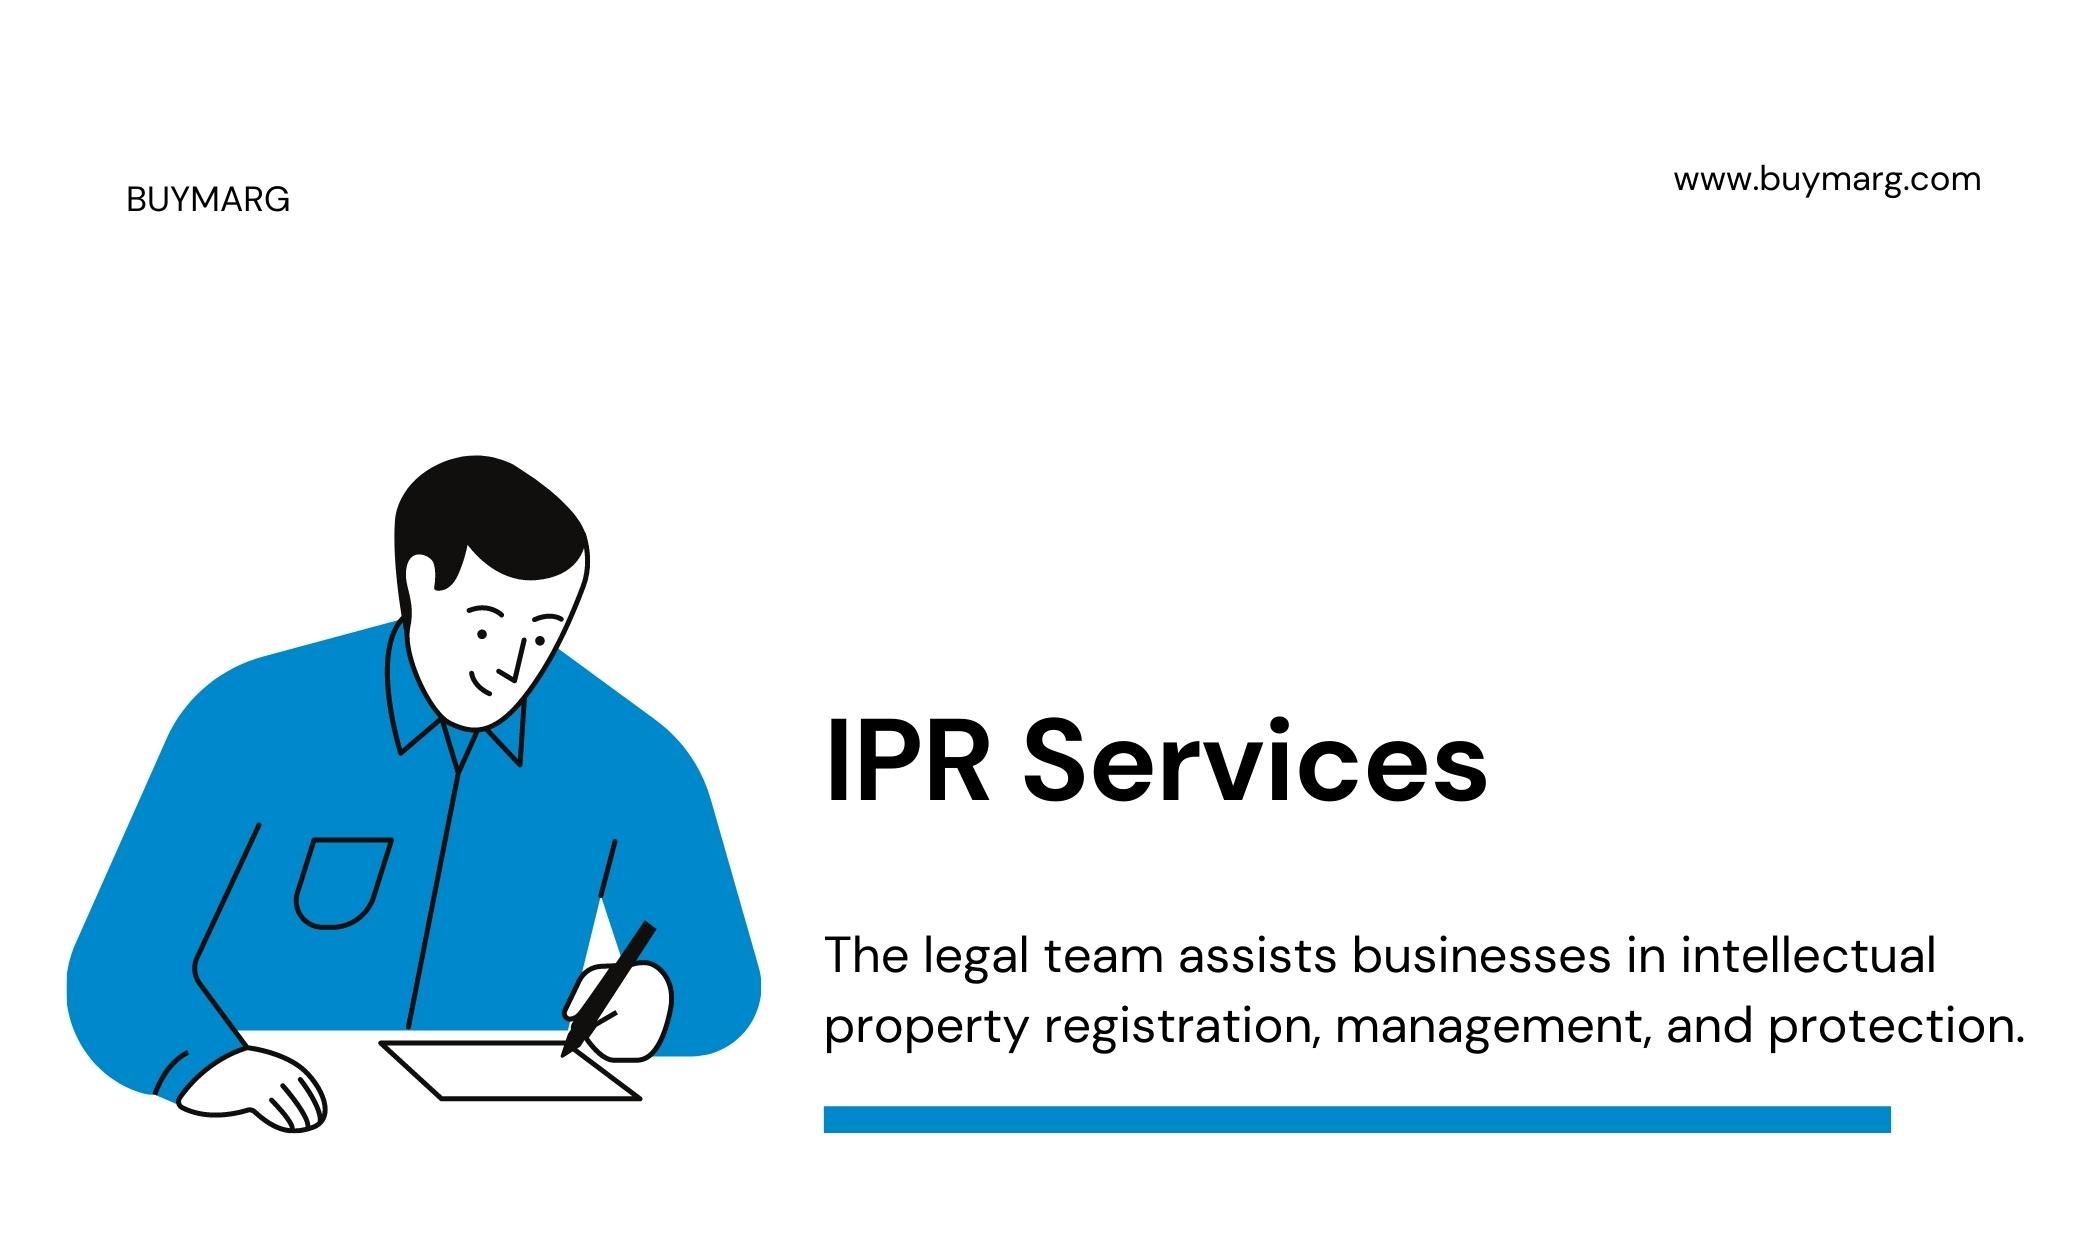 IPR Services